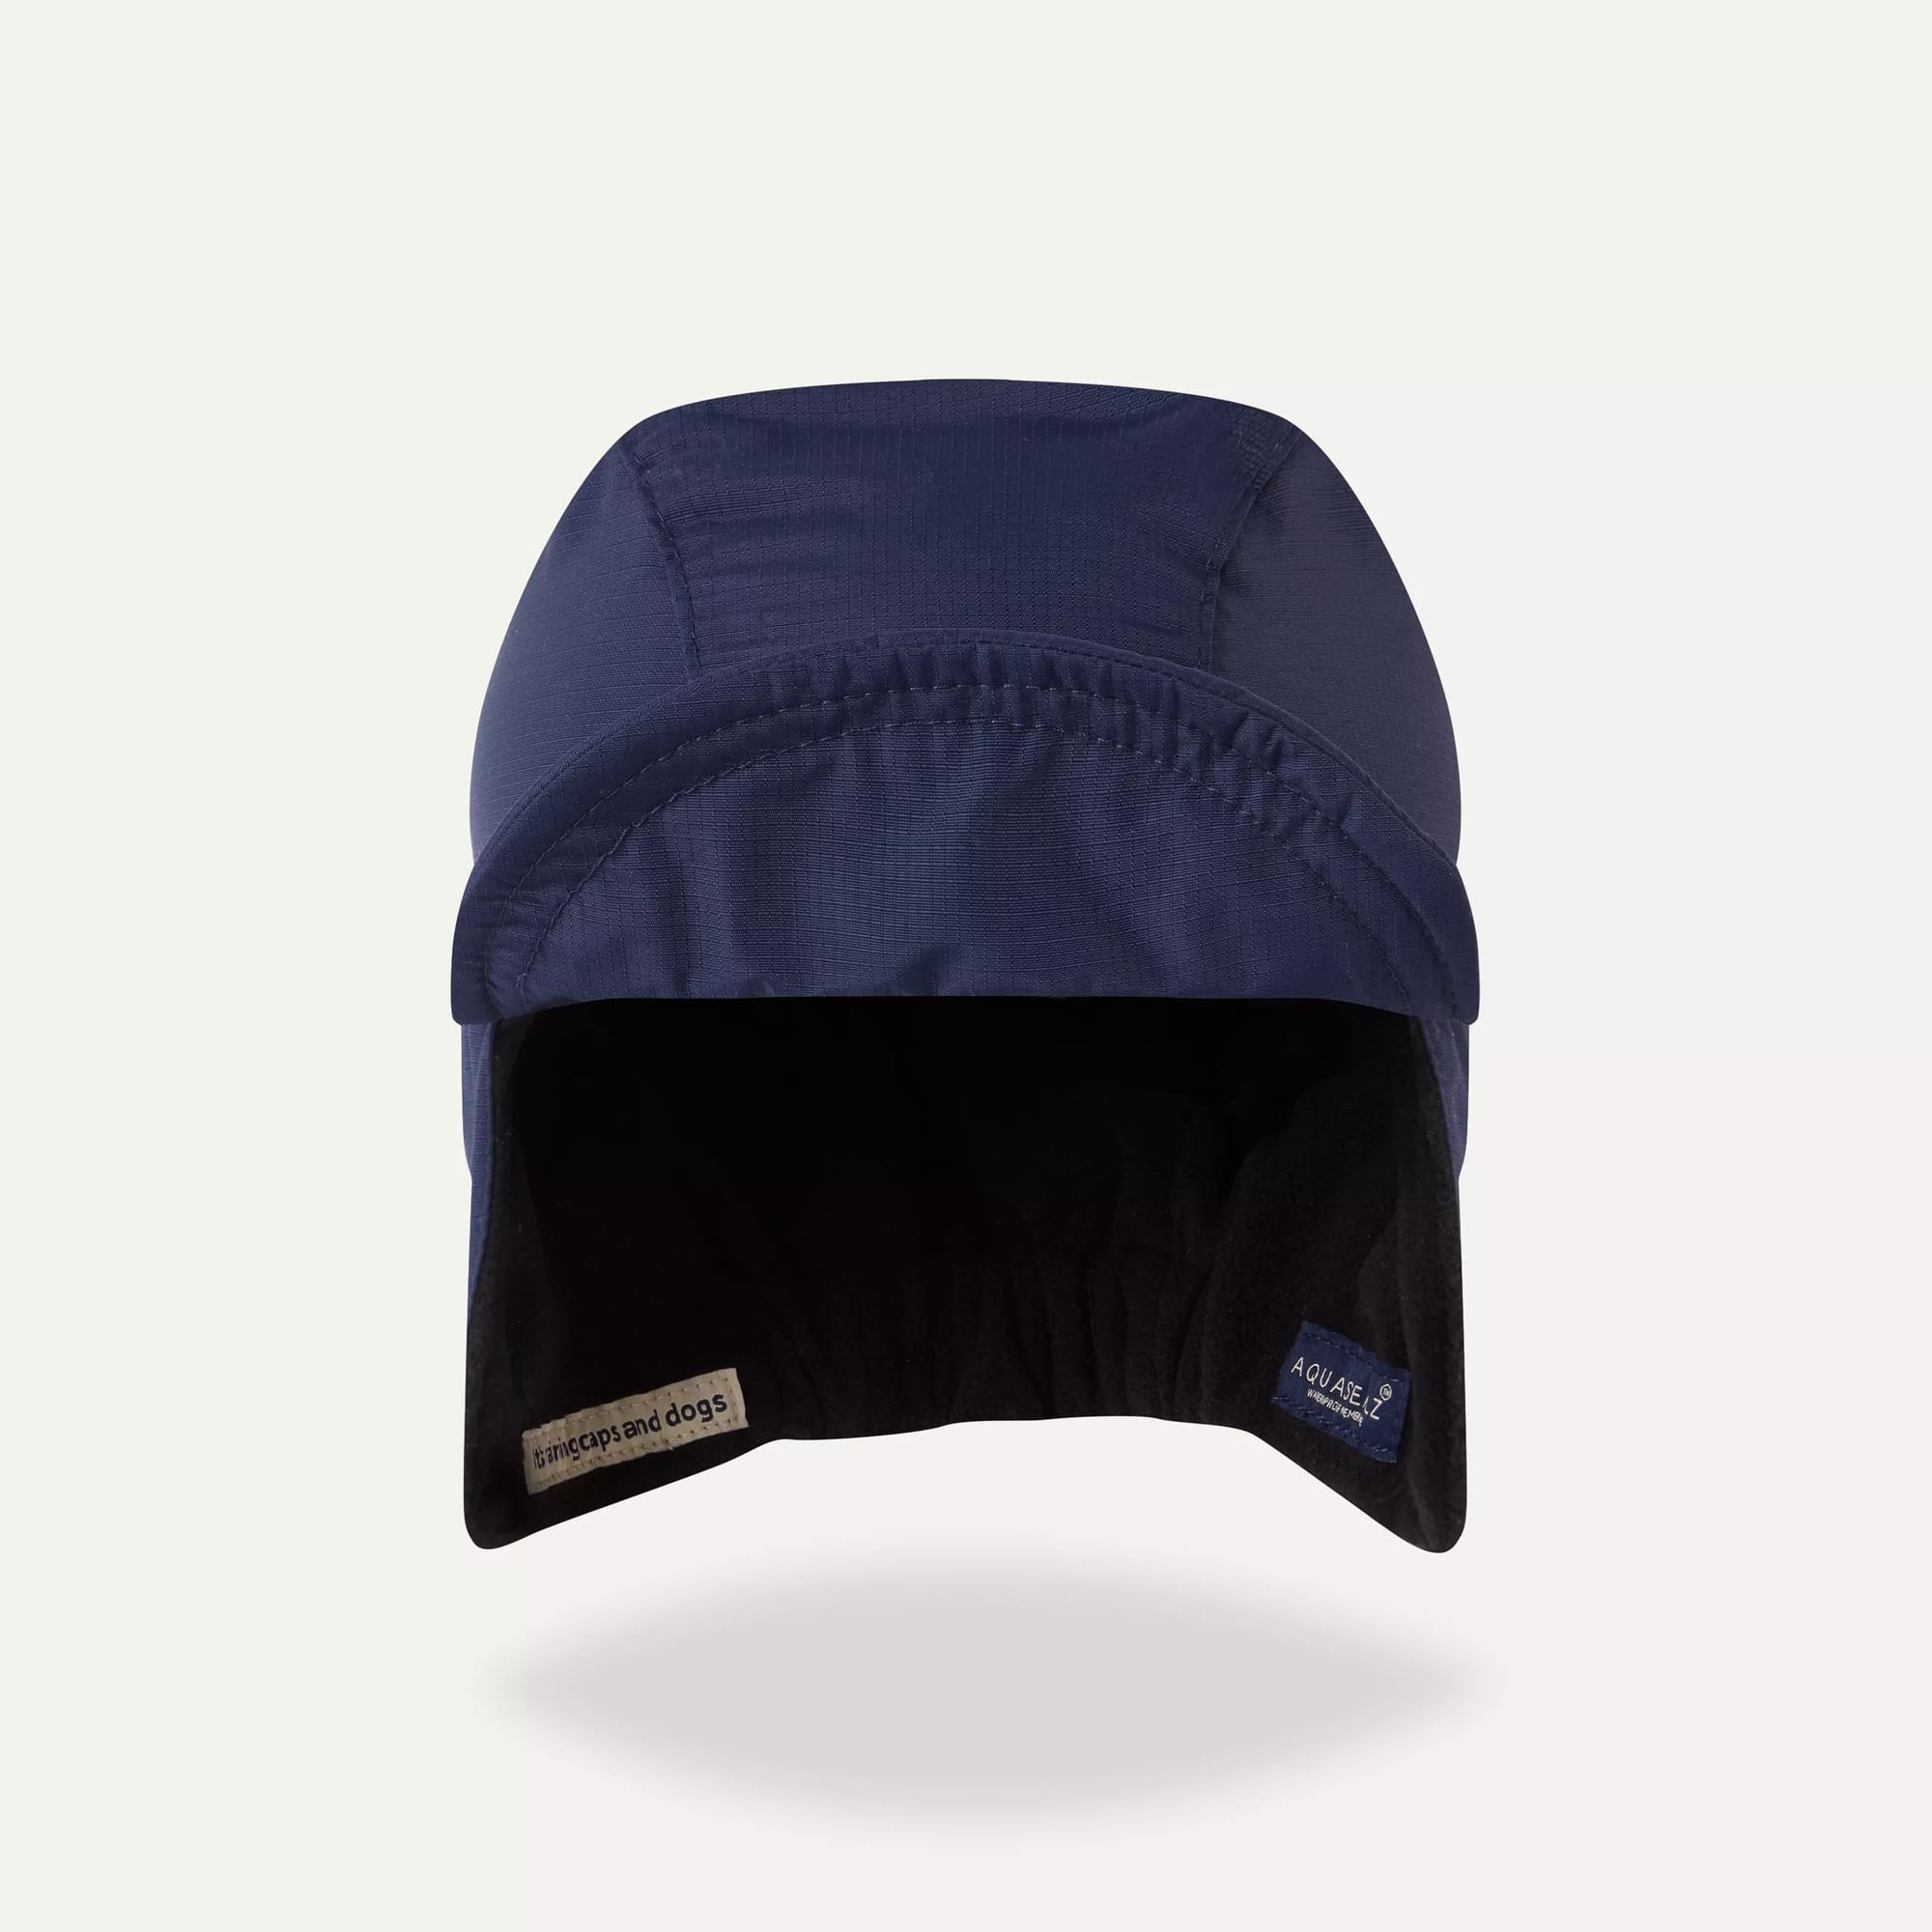 Rain Hats & Weatherproof Caps - Village Hat Shop